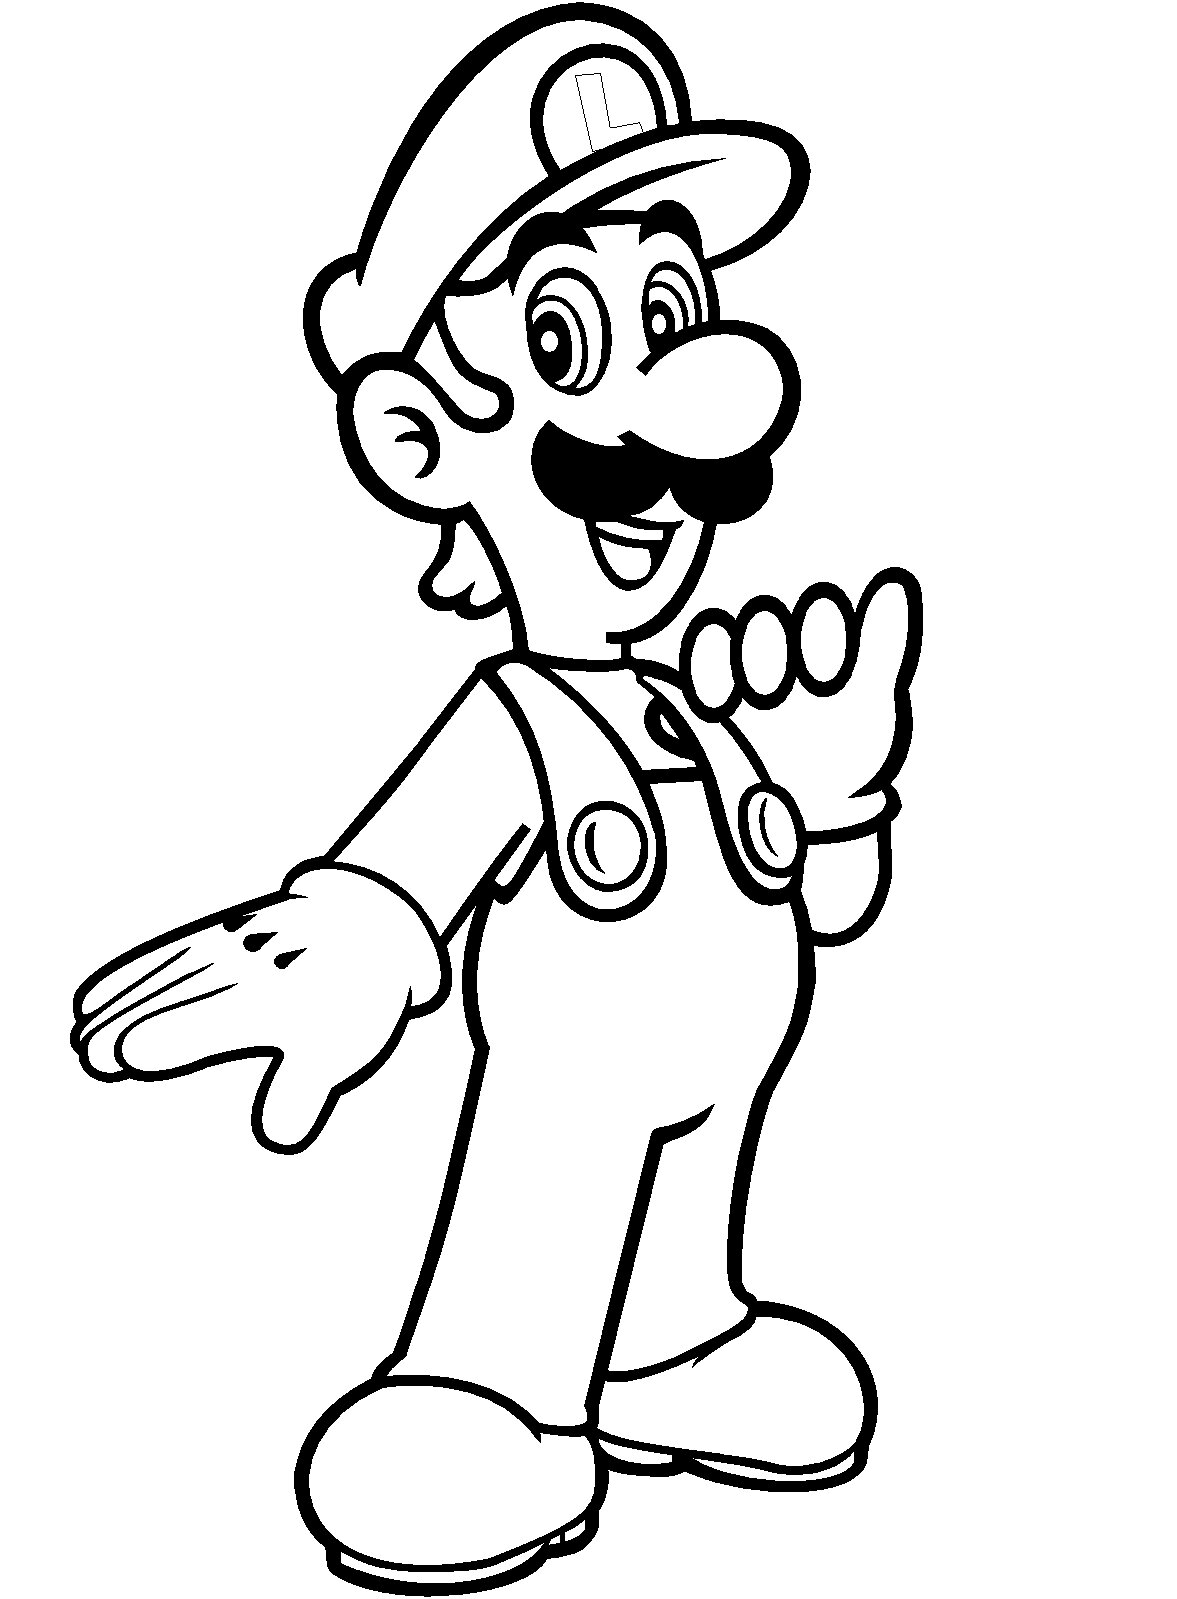 Luigi de Super Mario Bros de Luigi